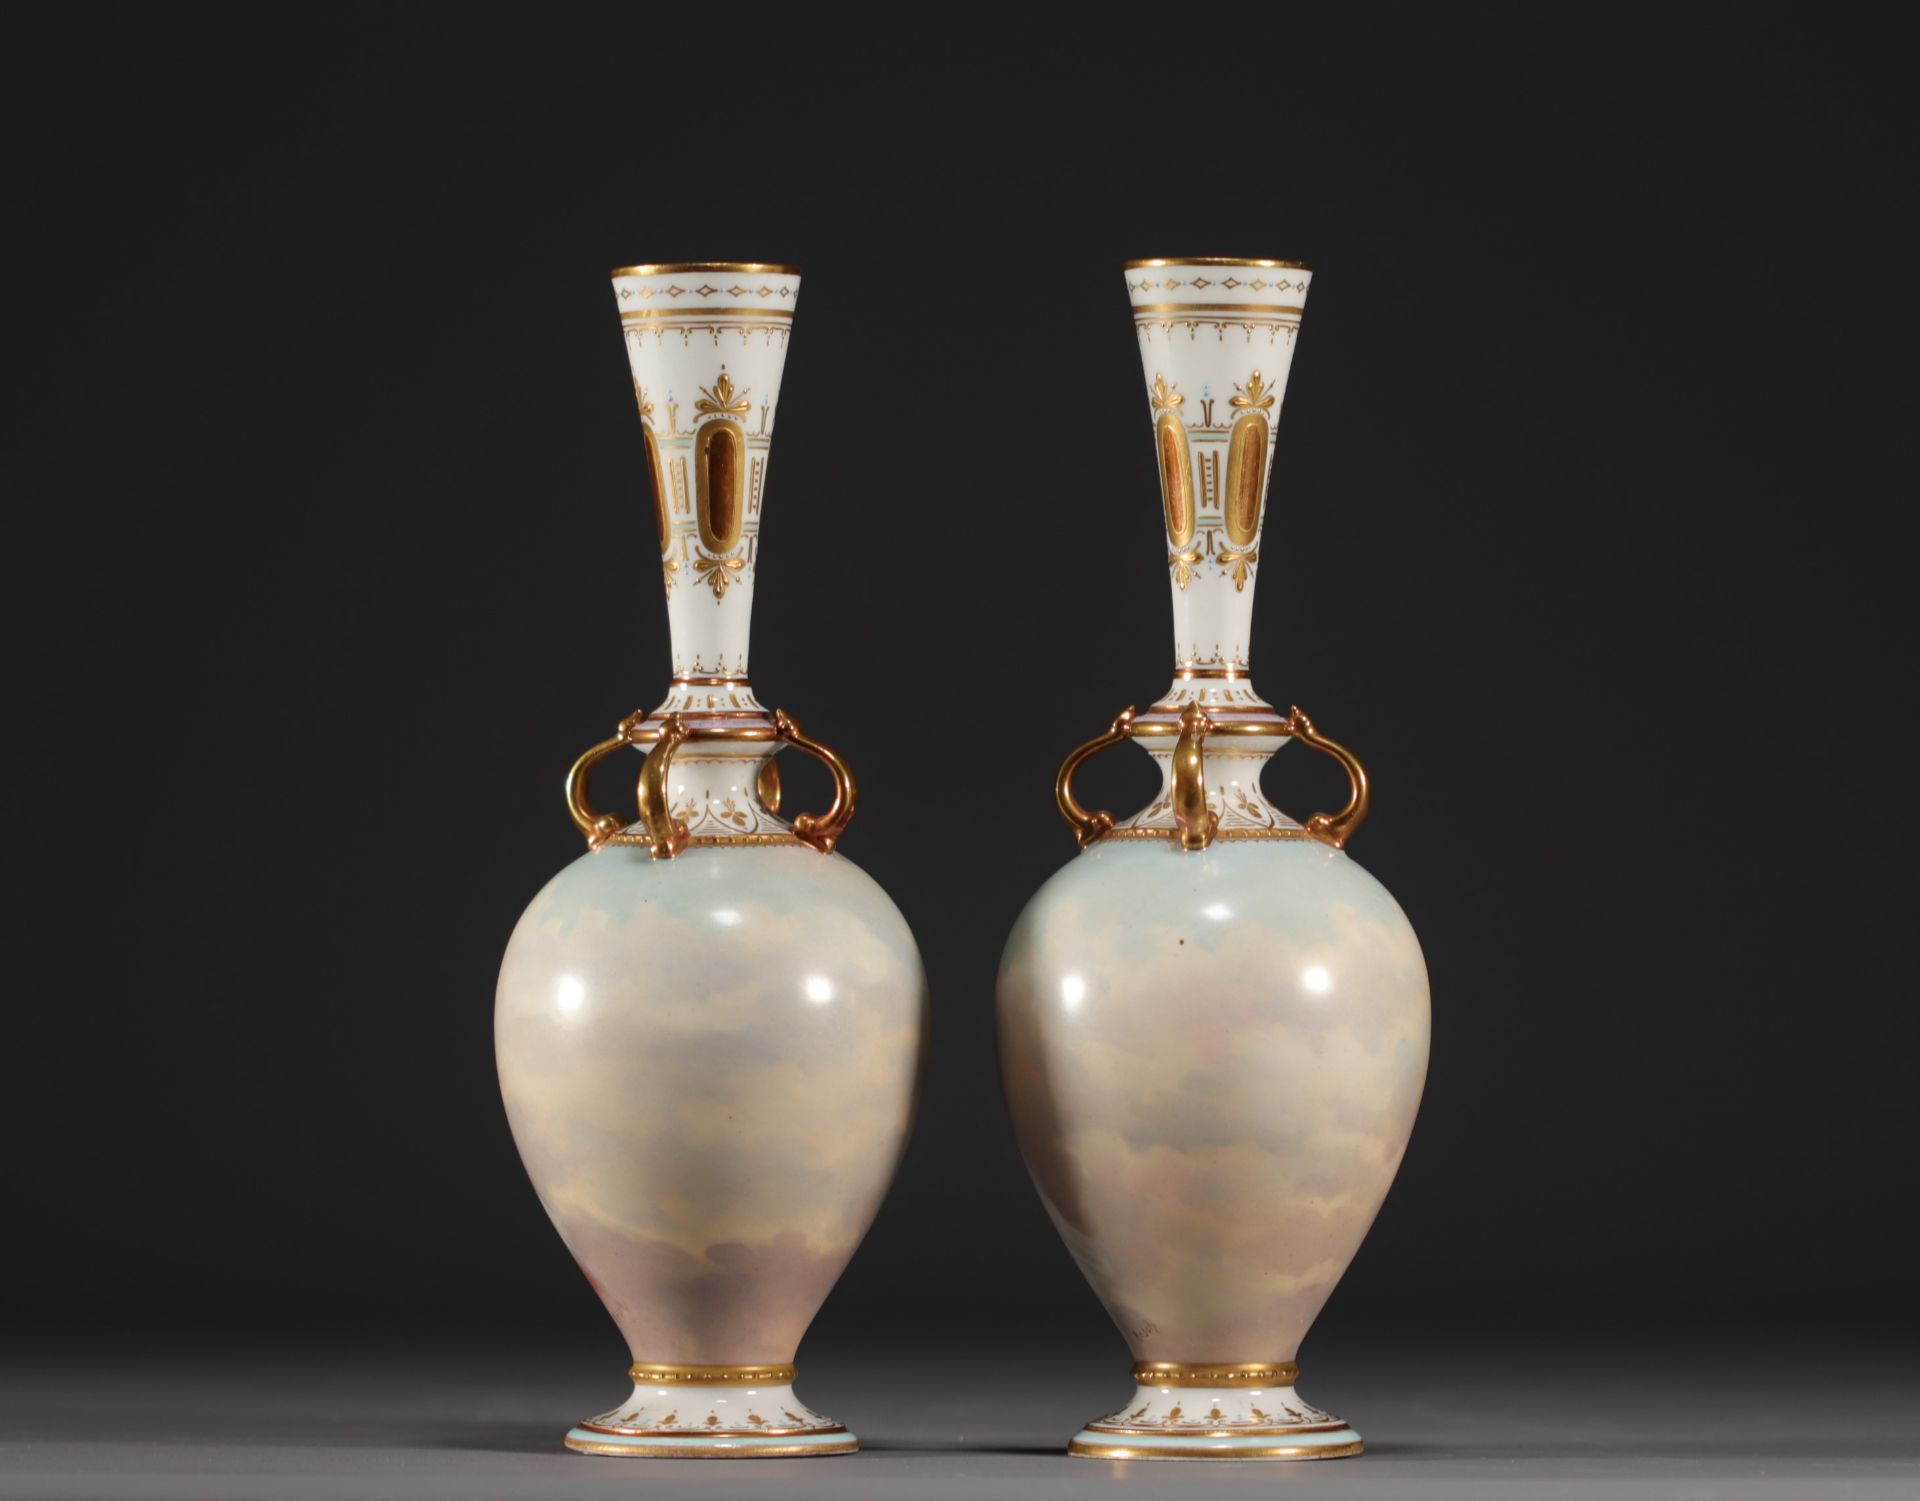 Old Vienna - Pair of porcelain vases decorated with portraits of elegant ladies, late 19th century. - Bild 2 aus 3